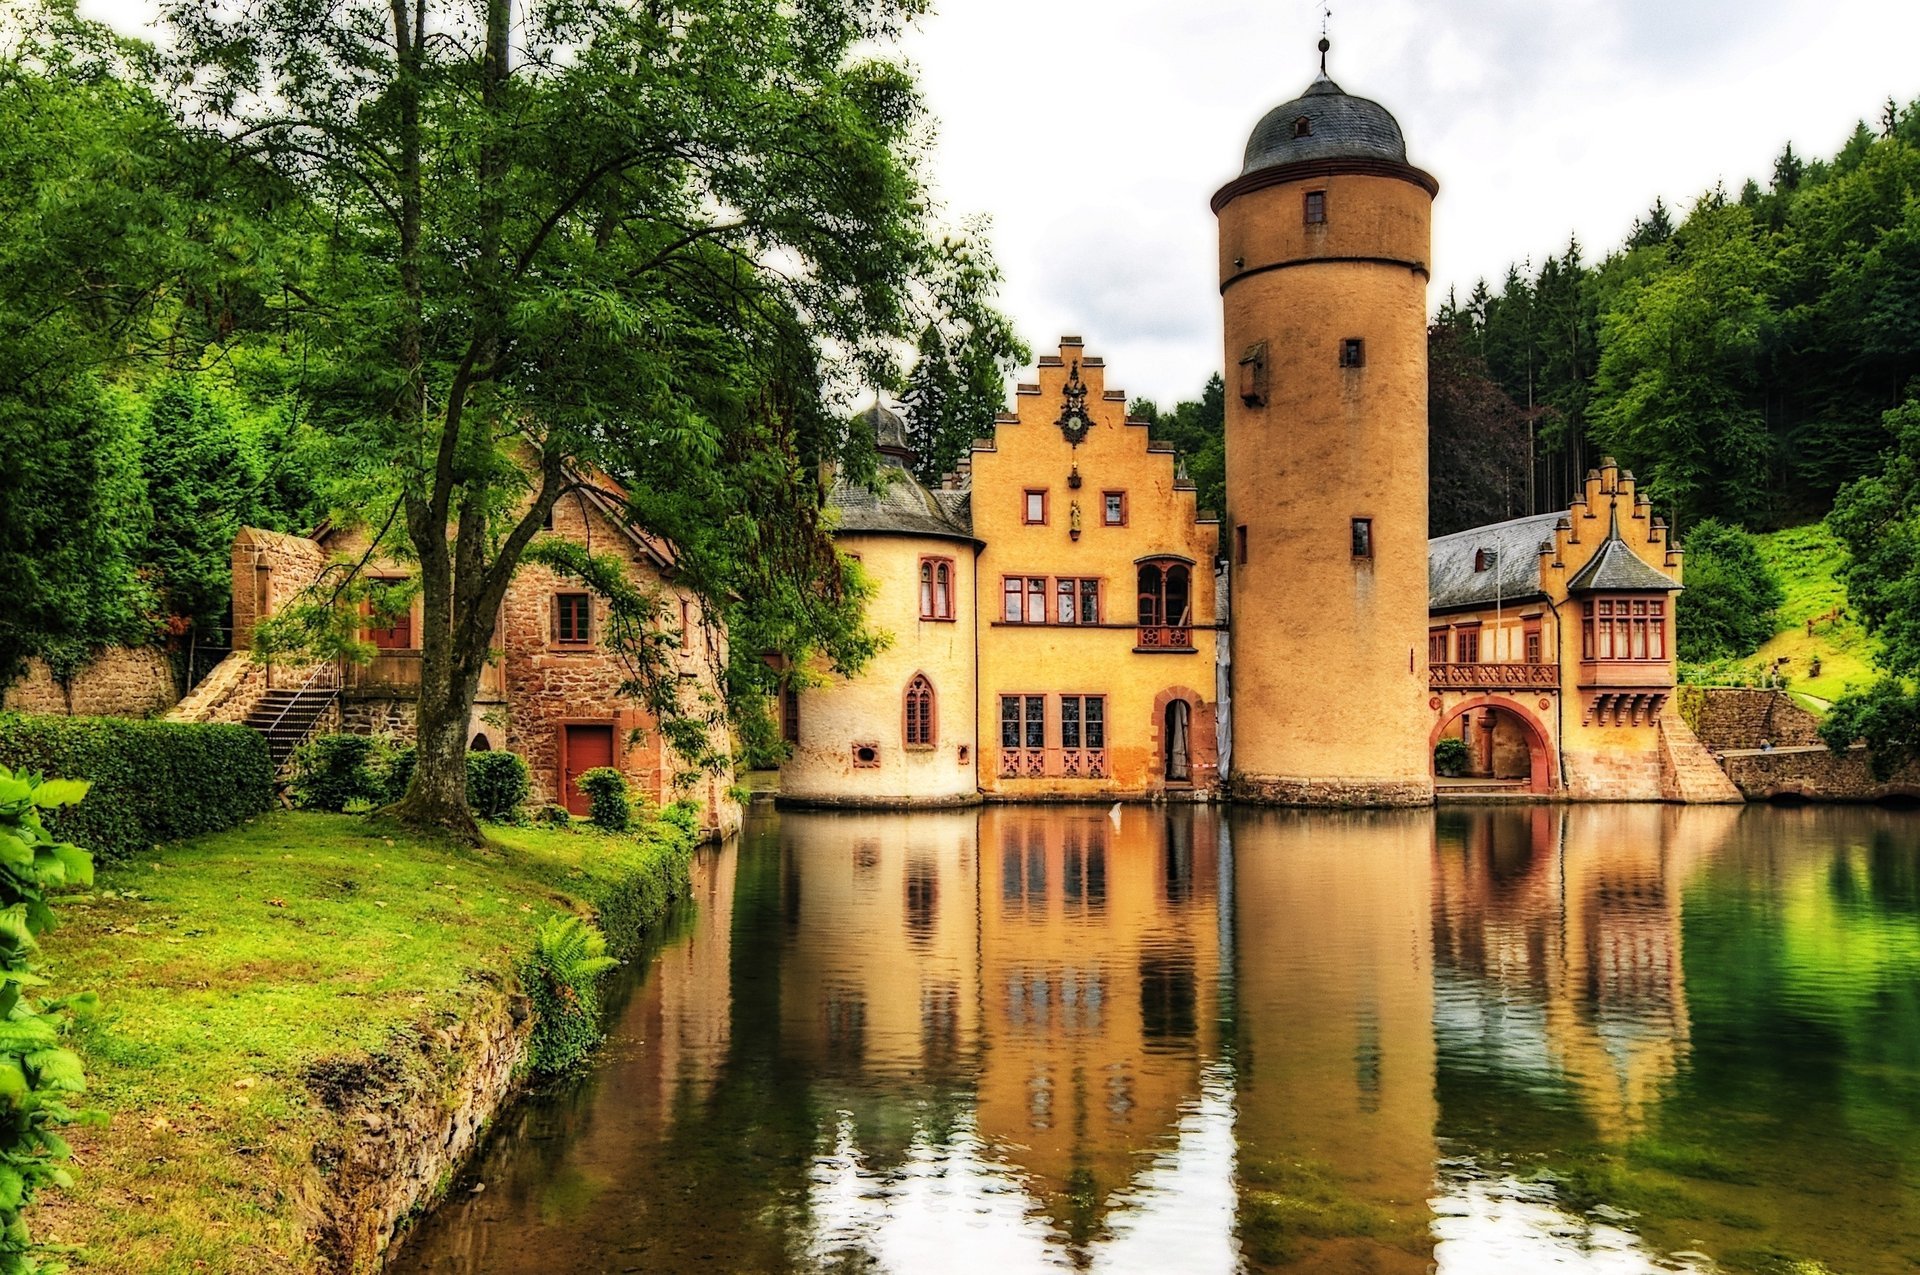 Beautiful German castle on the water